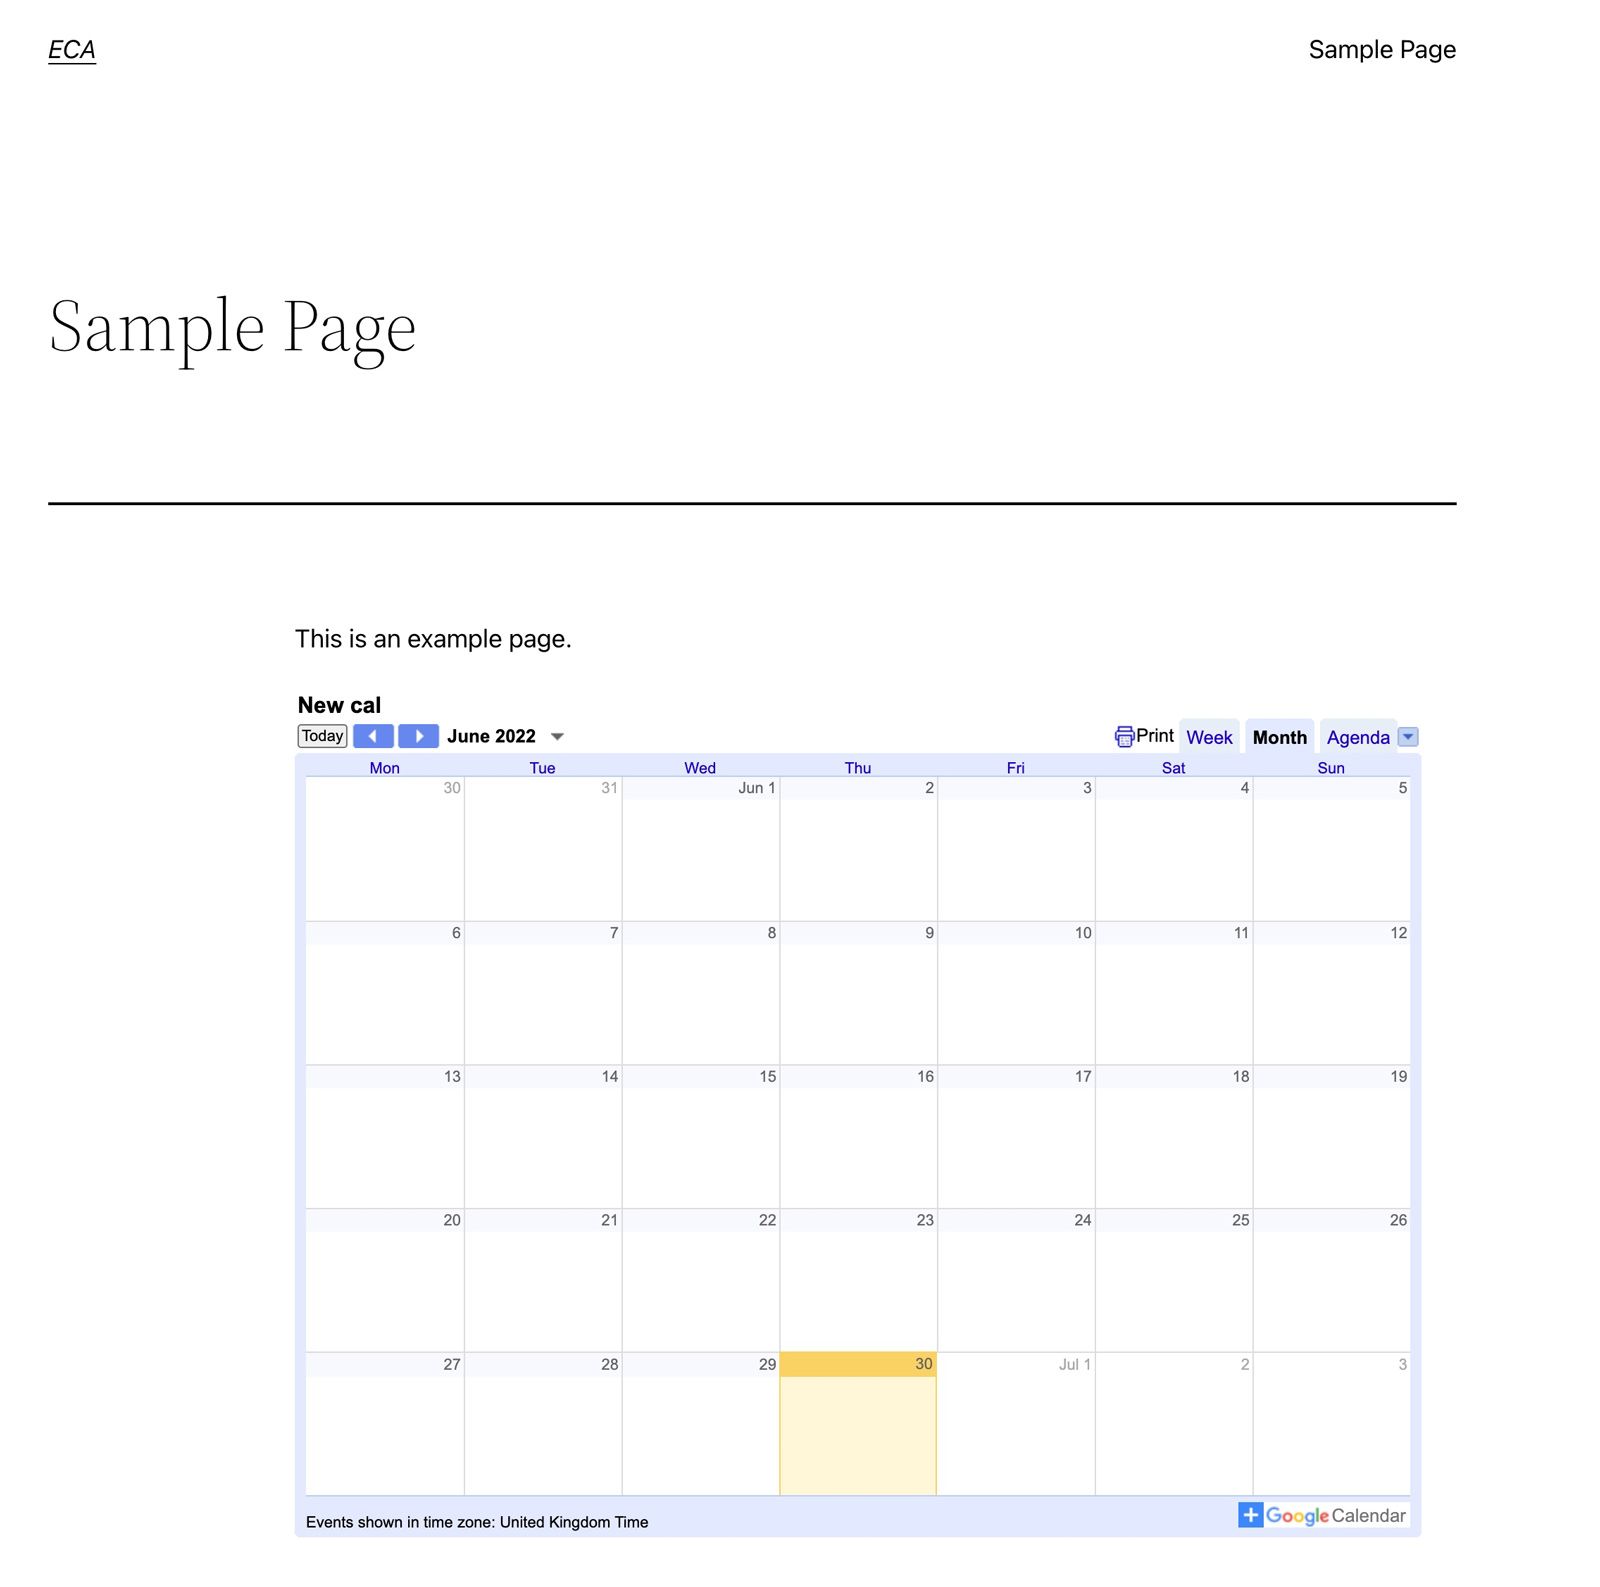 How to embed Google Calendar into Wordpress